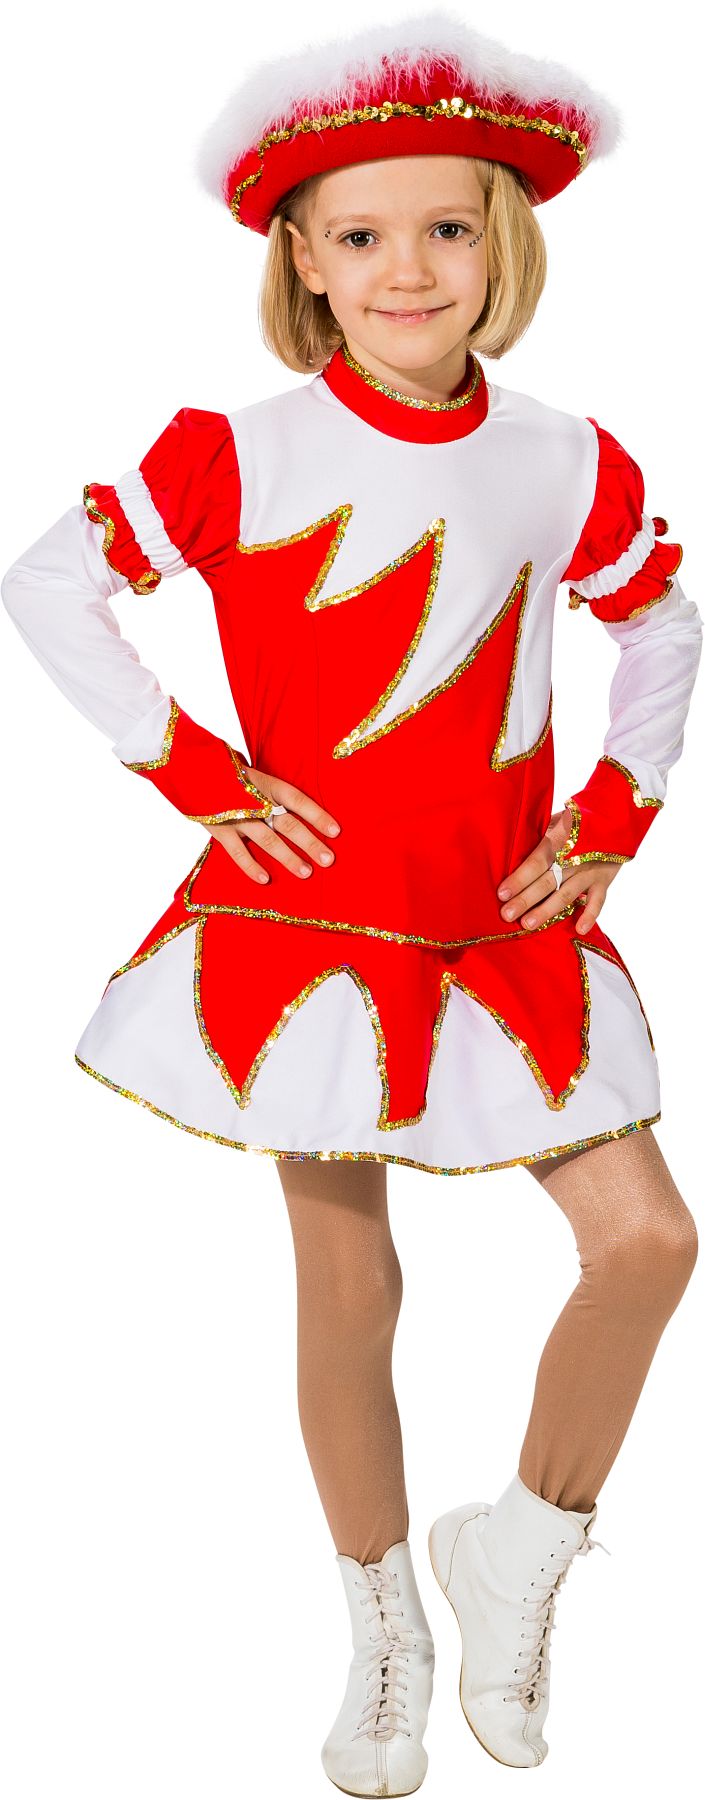 Spark costume red-white